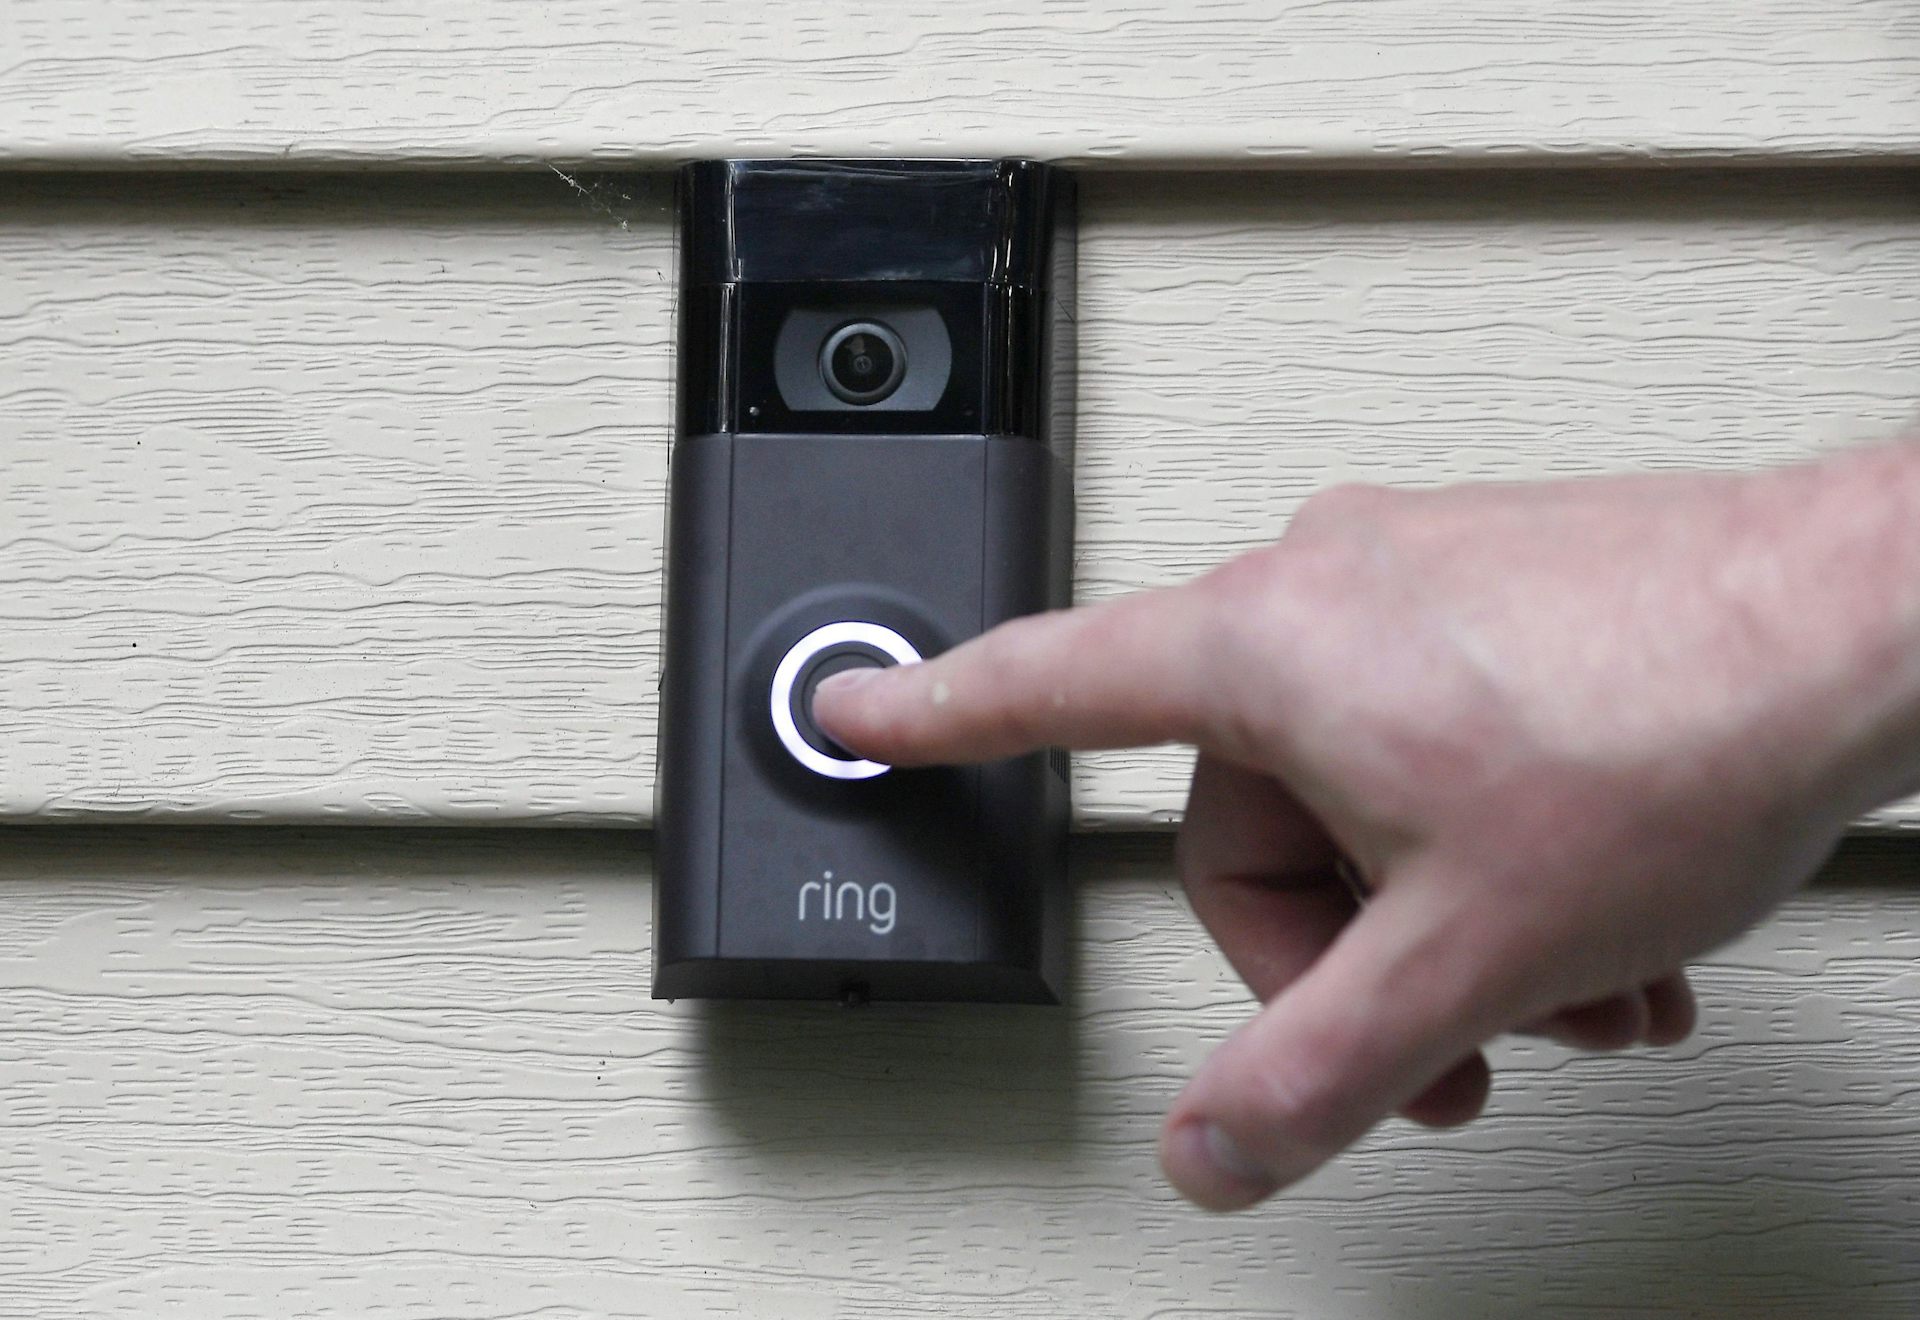 ring video doorbell canada